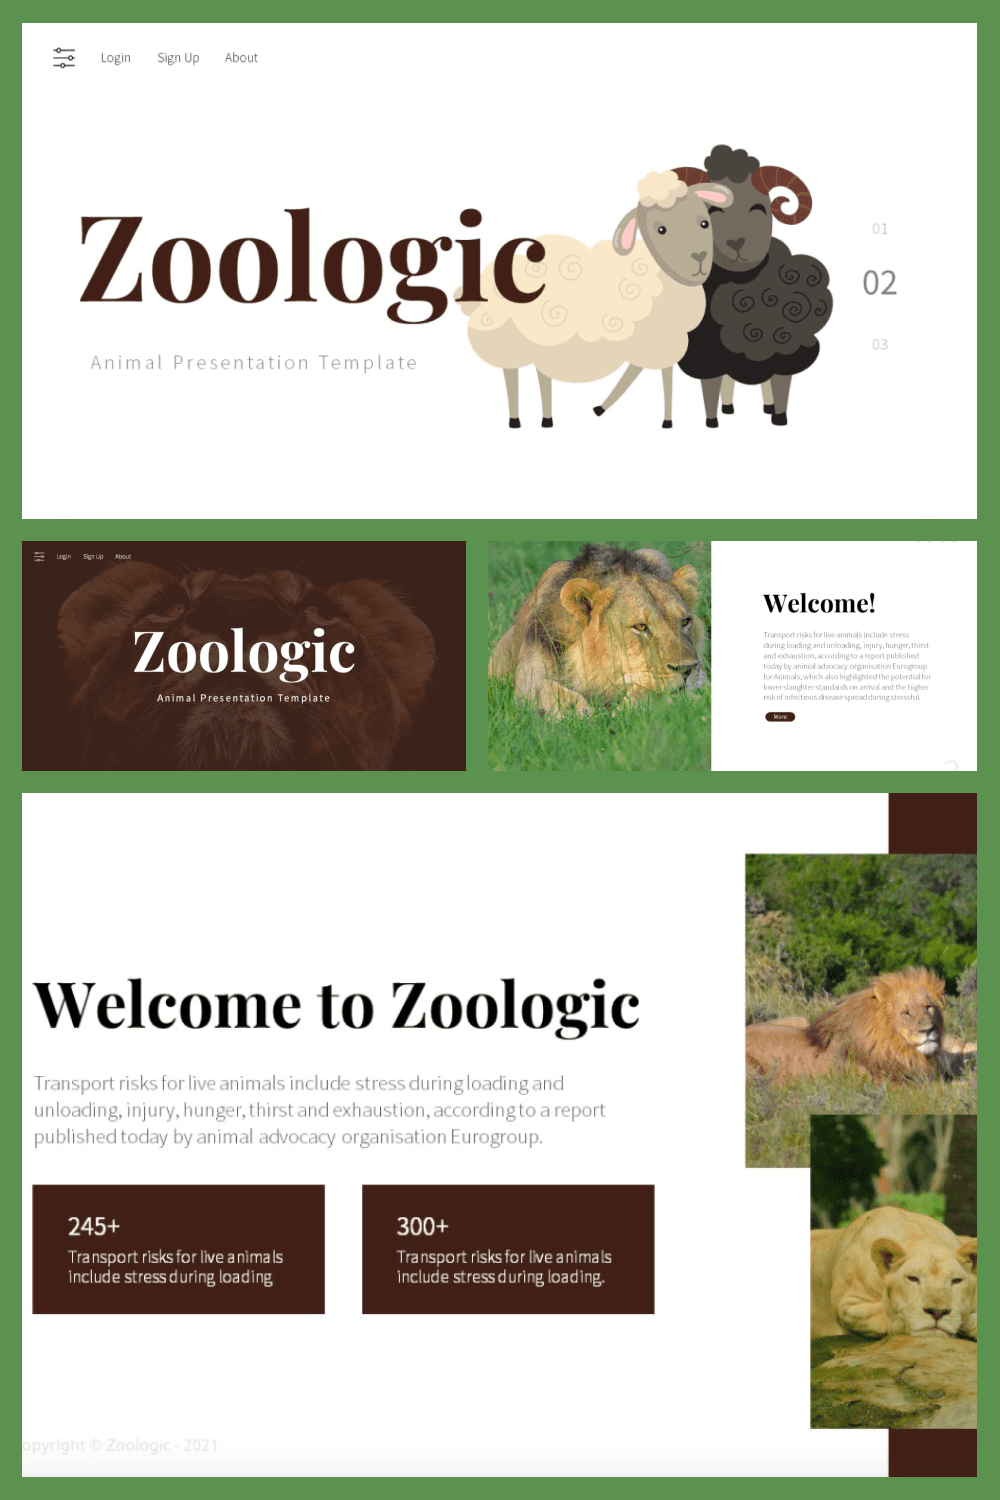 Zoologic animal presentation template.